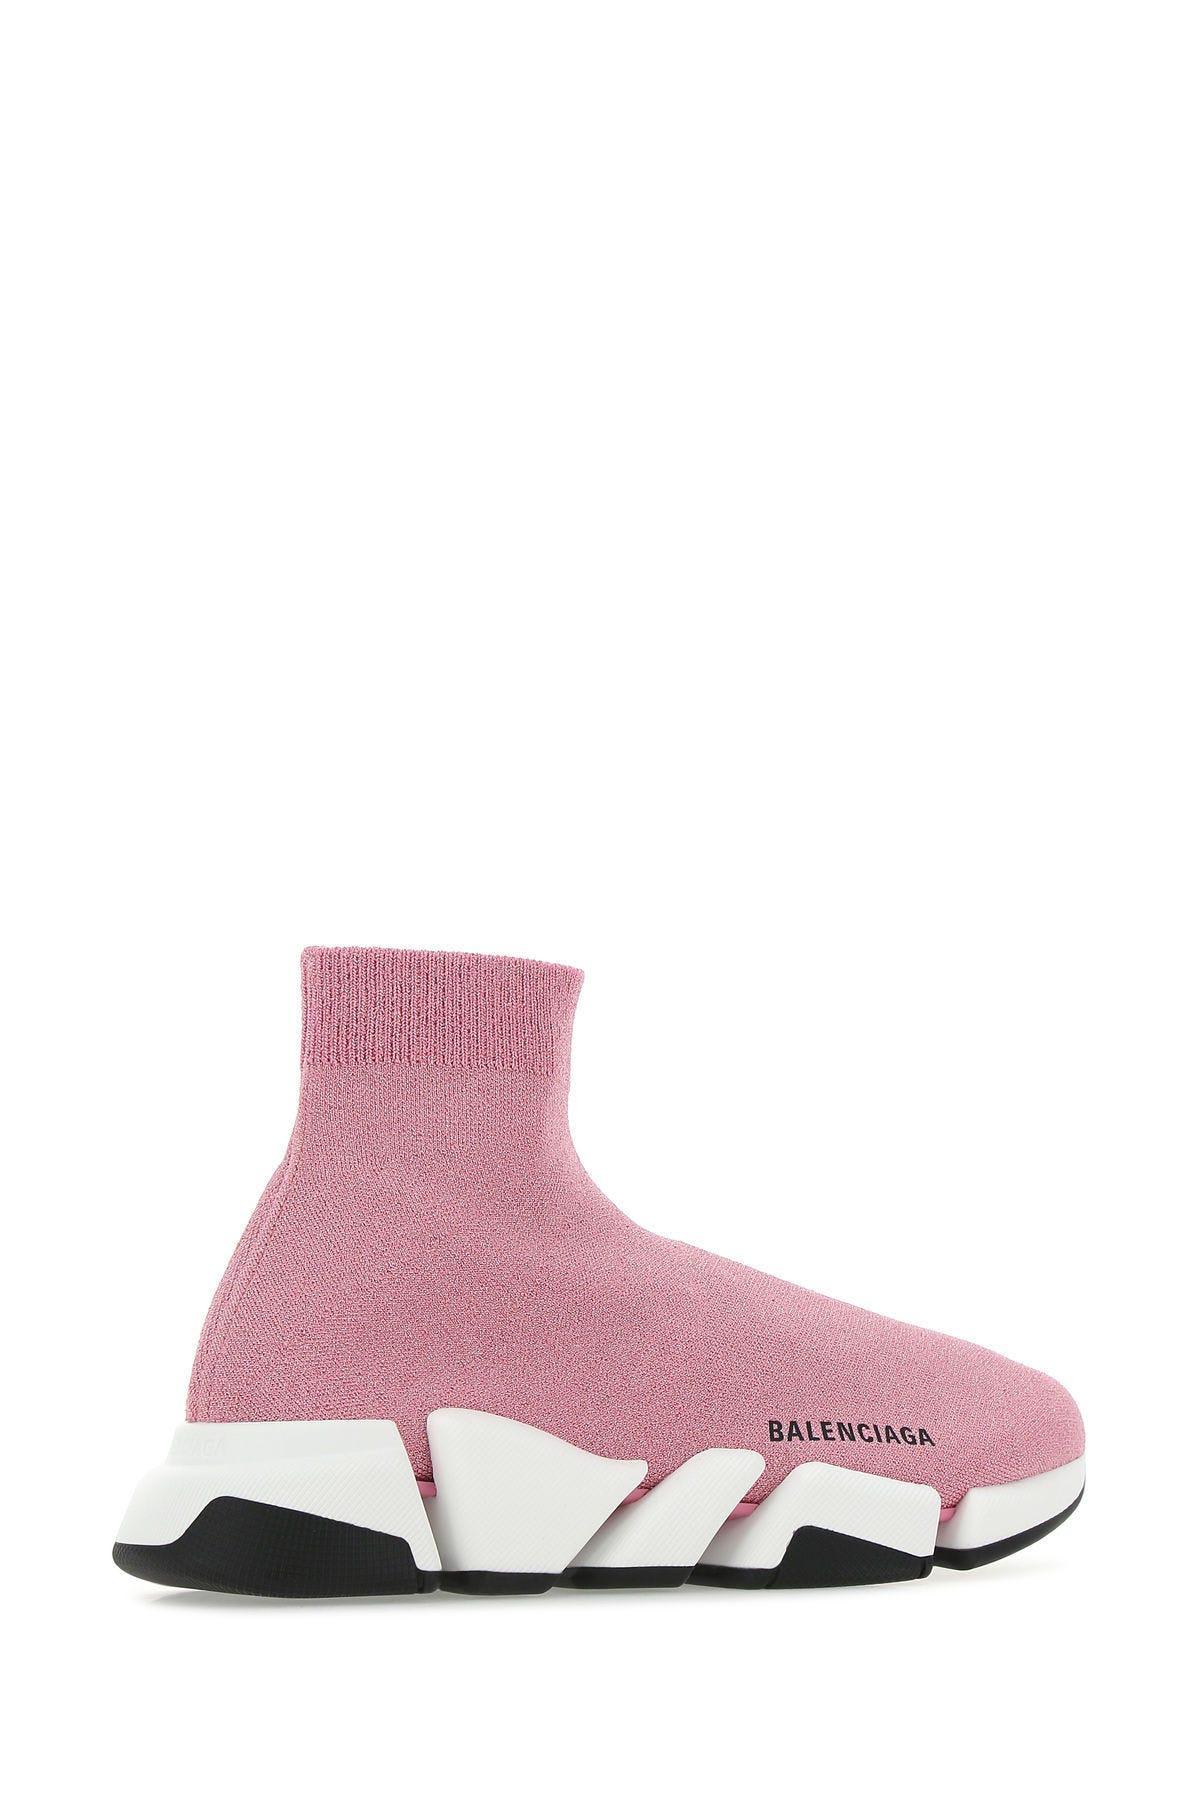 Balenciaga Pink Stretch Nylon Speed 2.0 Sneakers | Lyst